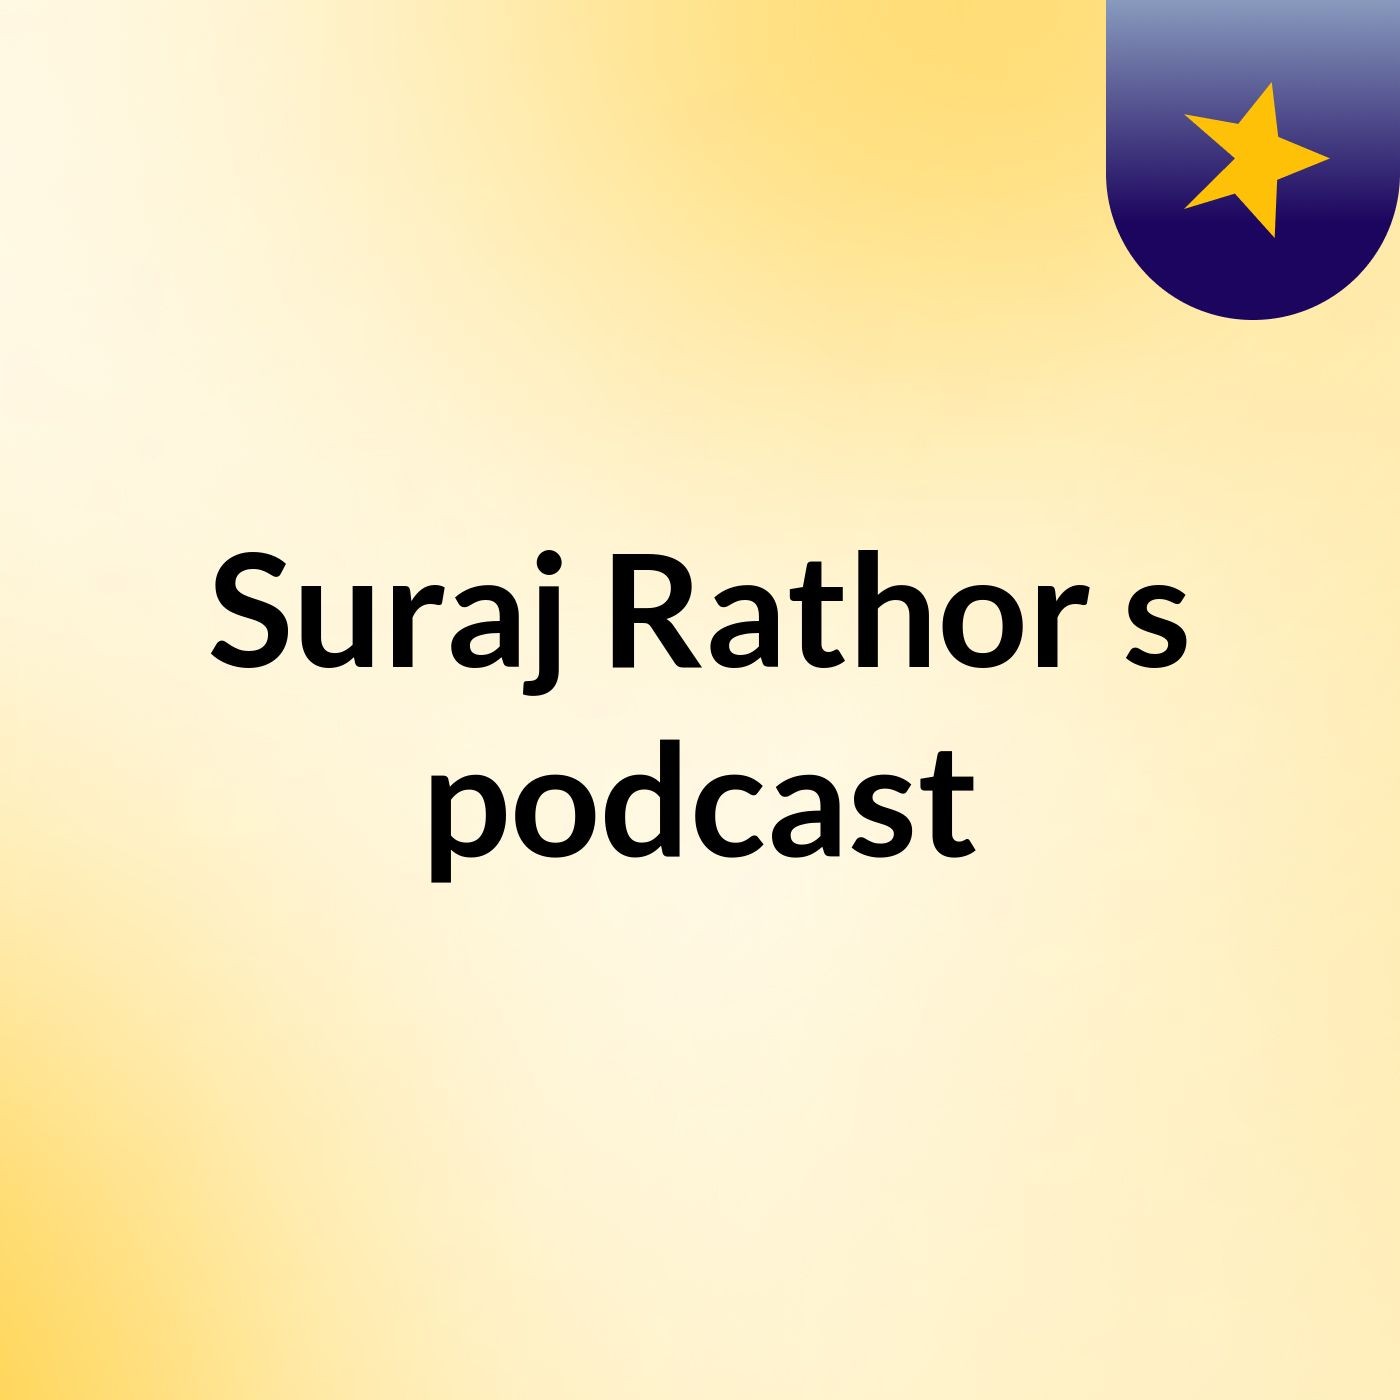 Suraj Rathor's podcast